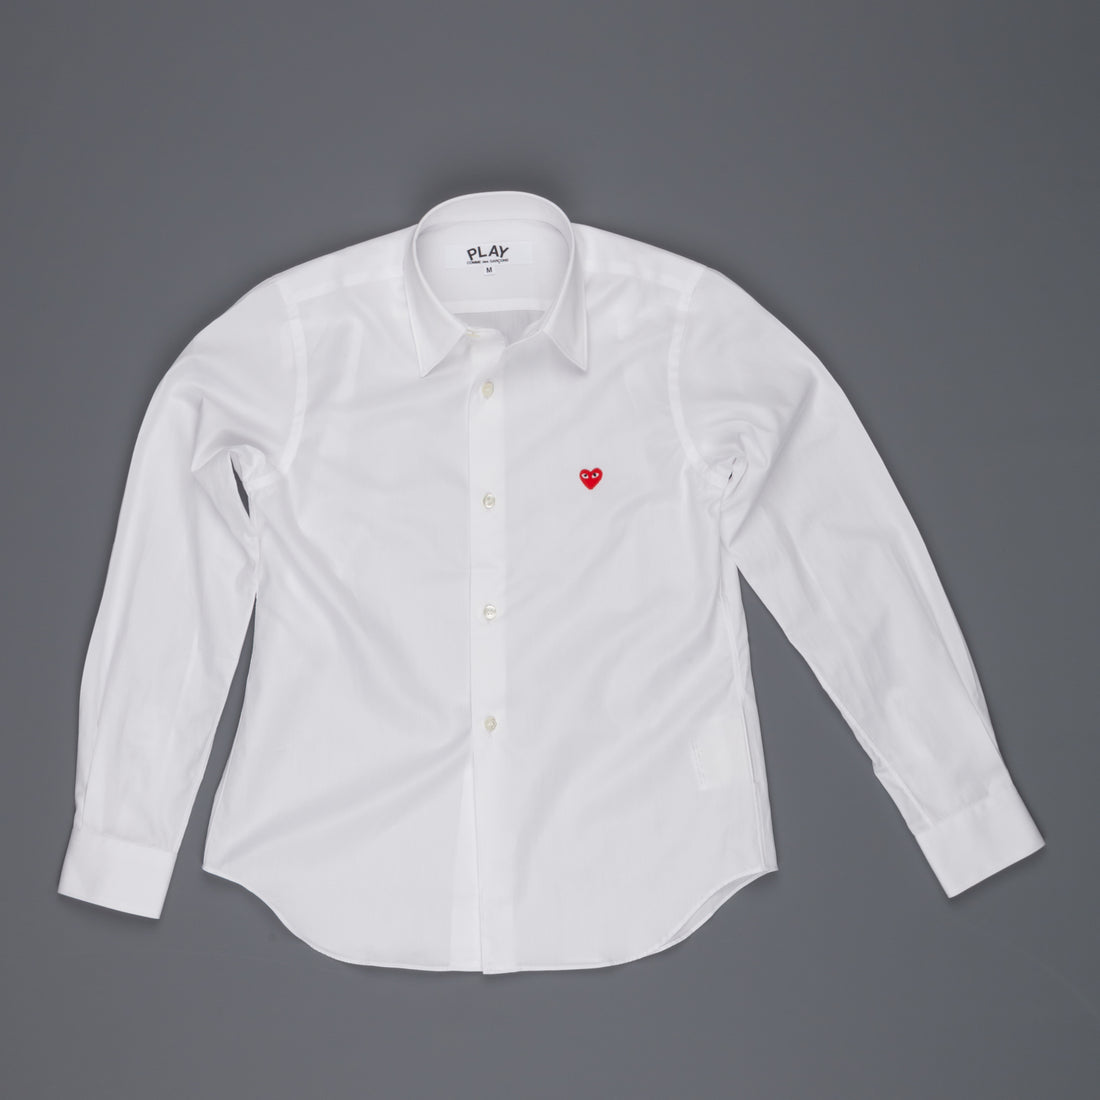 Comme des Garçons PLAY Woman white shirt small red heart